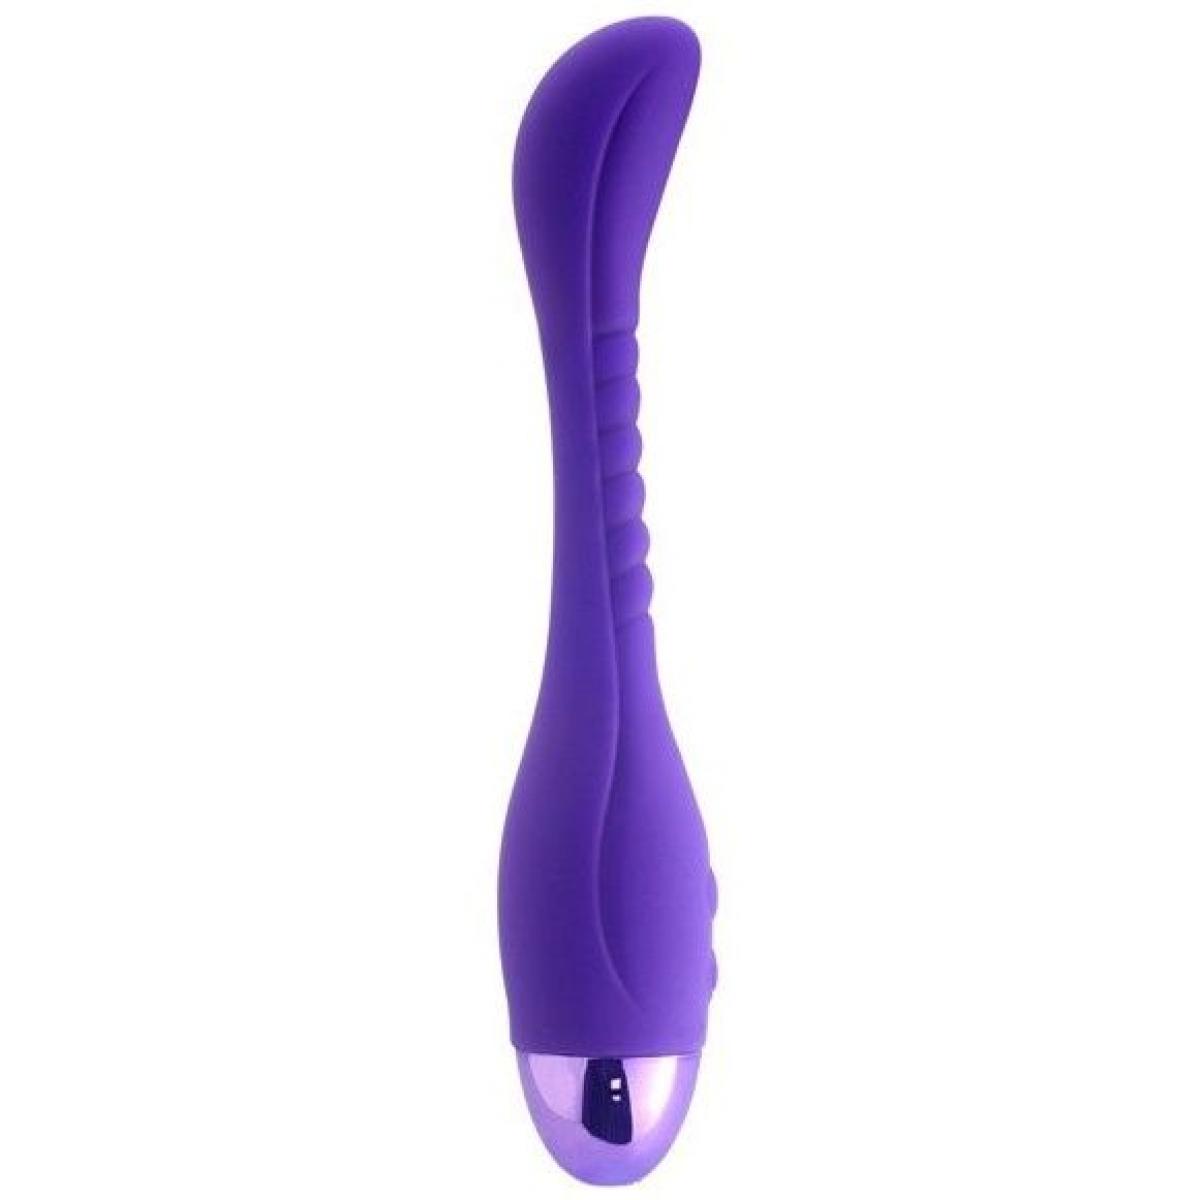 Фиолетовый вибратор INDULGENCE Slender G Vibe - 21 см.